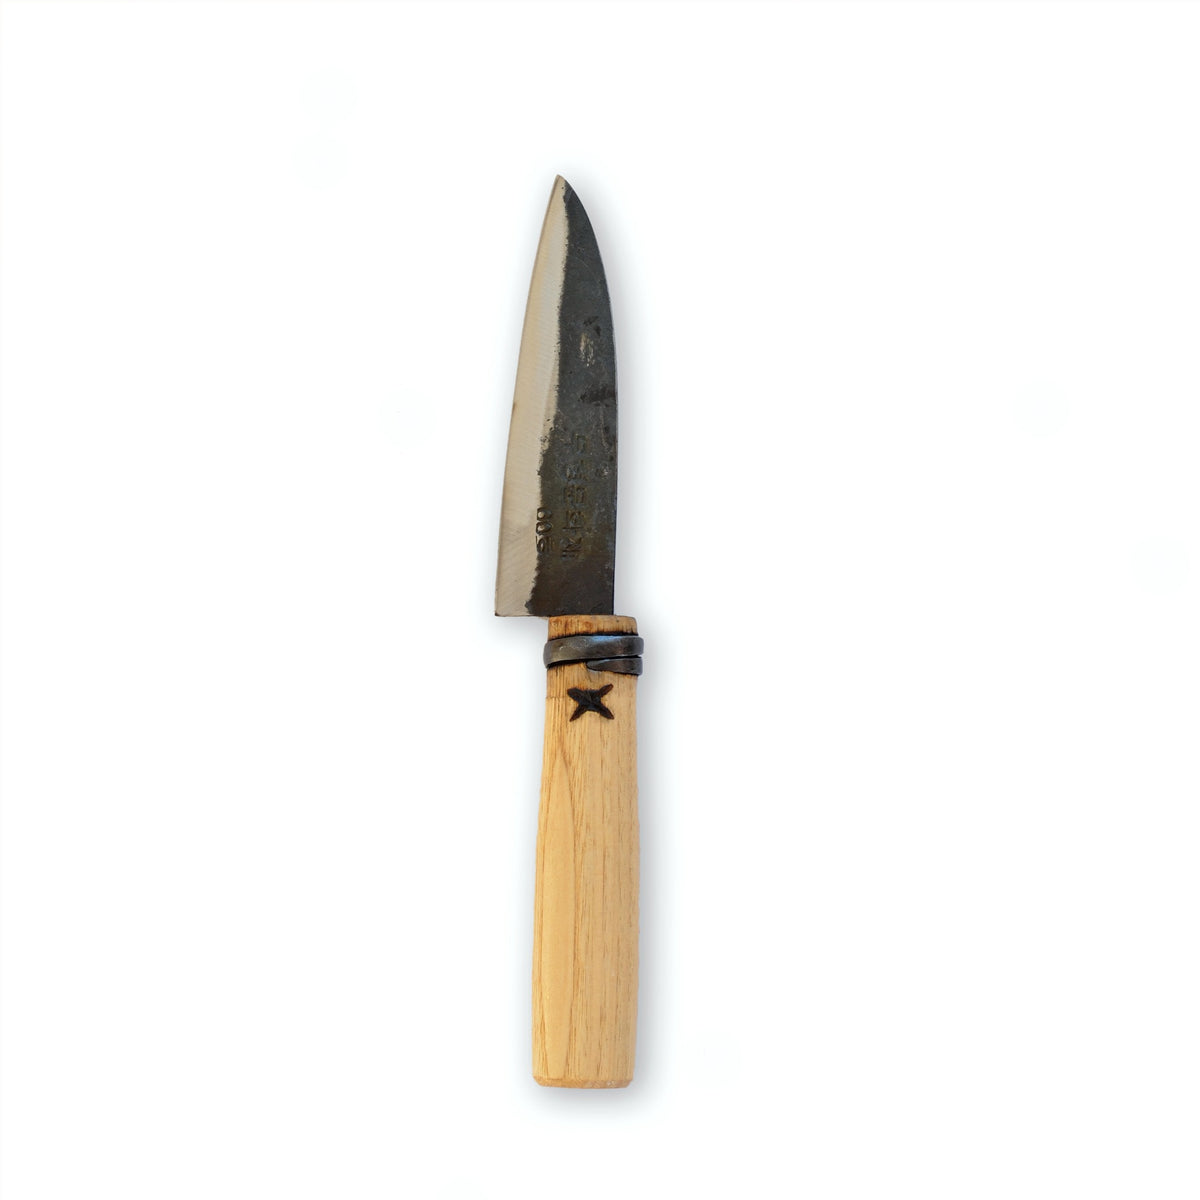 #59 Rustic Paring Knife, large, product photo on white background